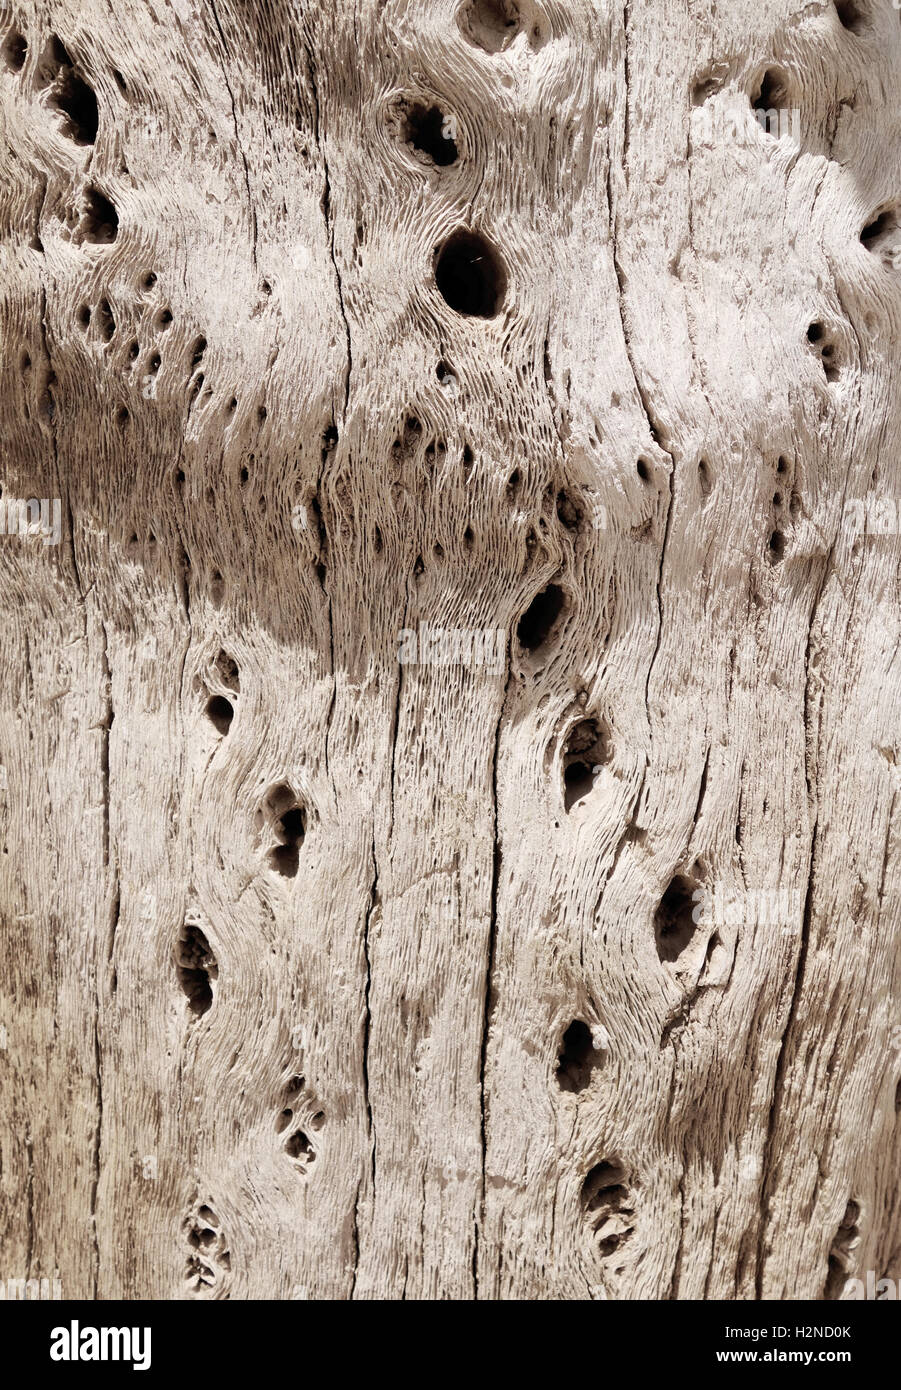 Cactus wood bark background texture Stock Photo